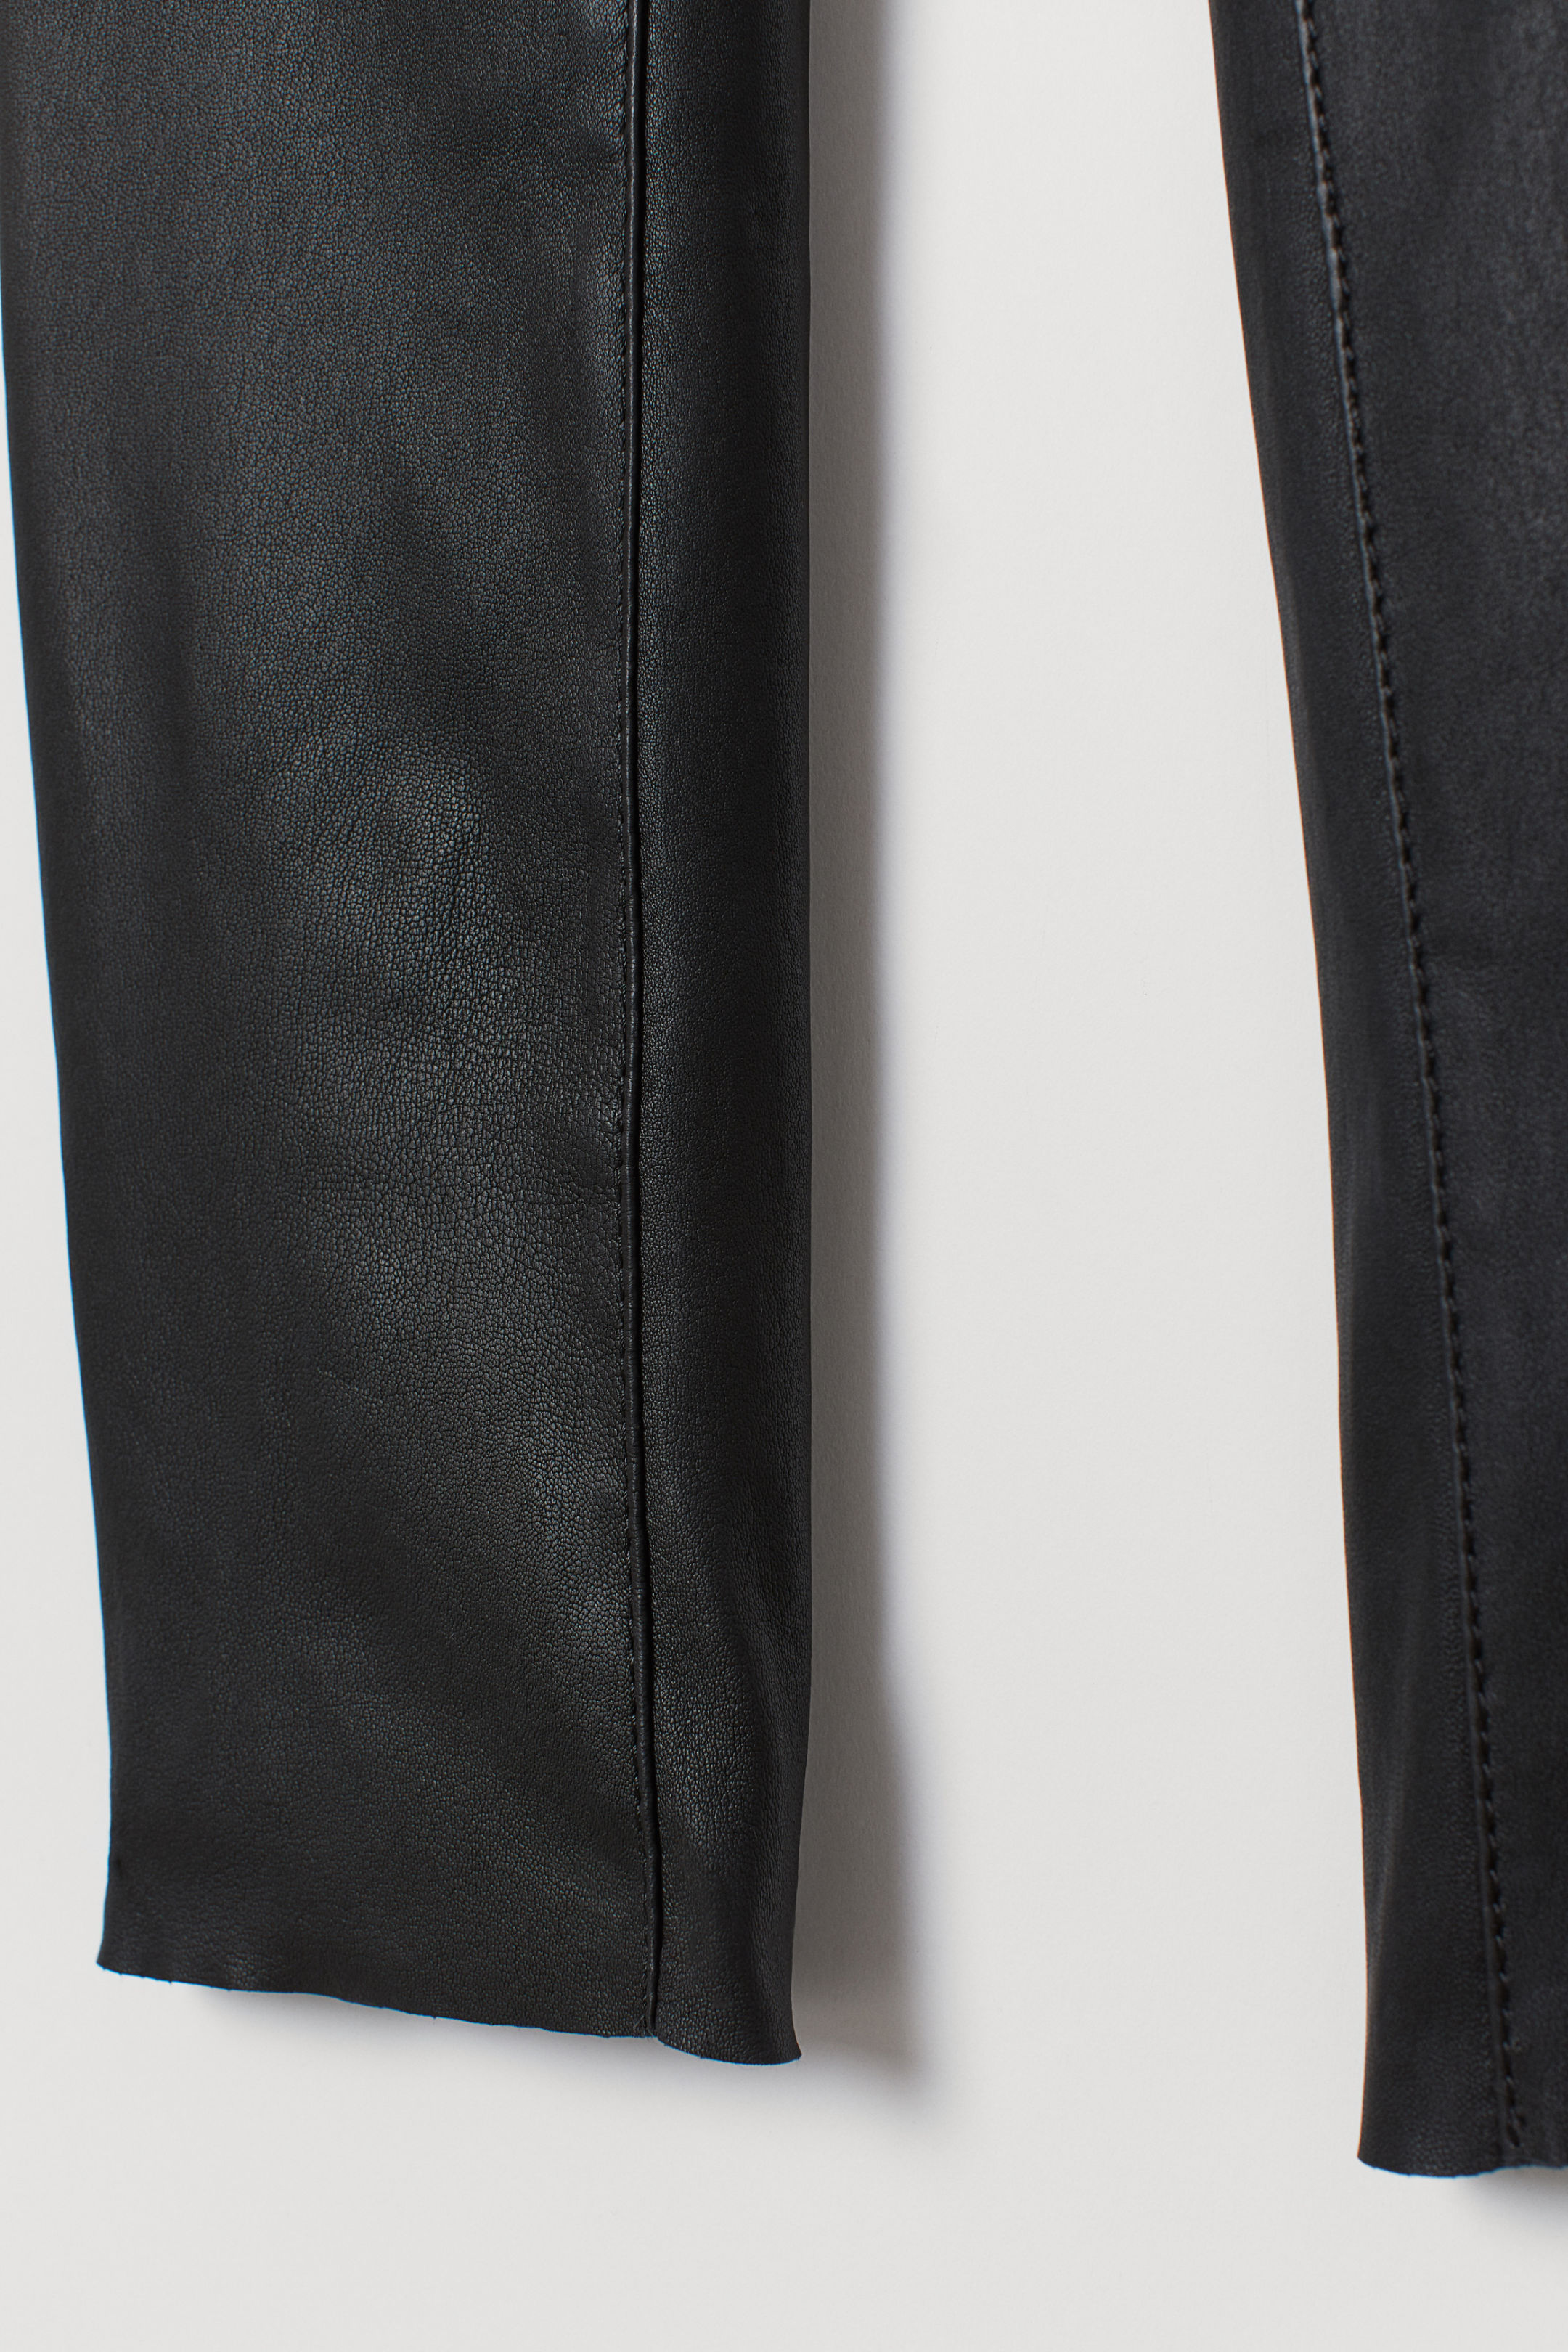 HMGYH satina high waisted leggings for women Split Hem PU Leather Skinny  Pants (Color : Black, Size : S)